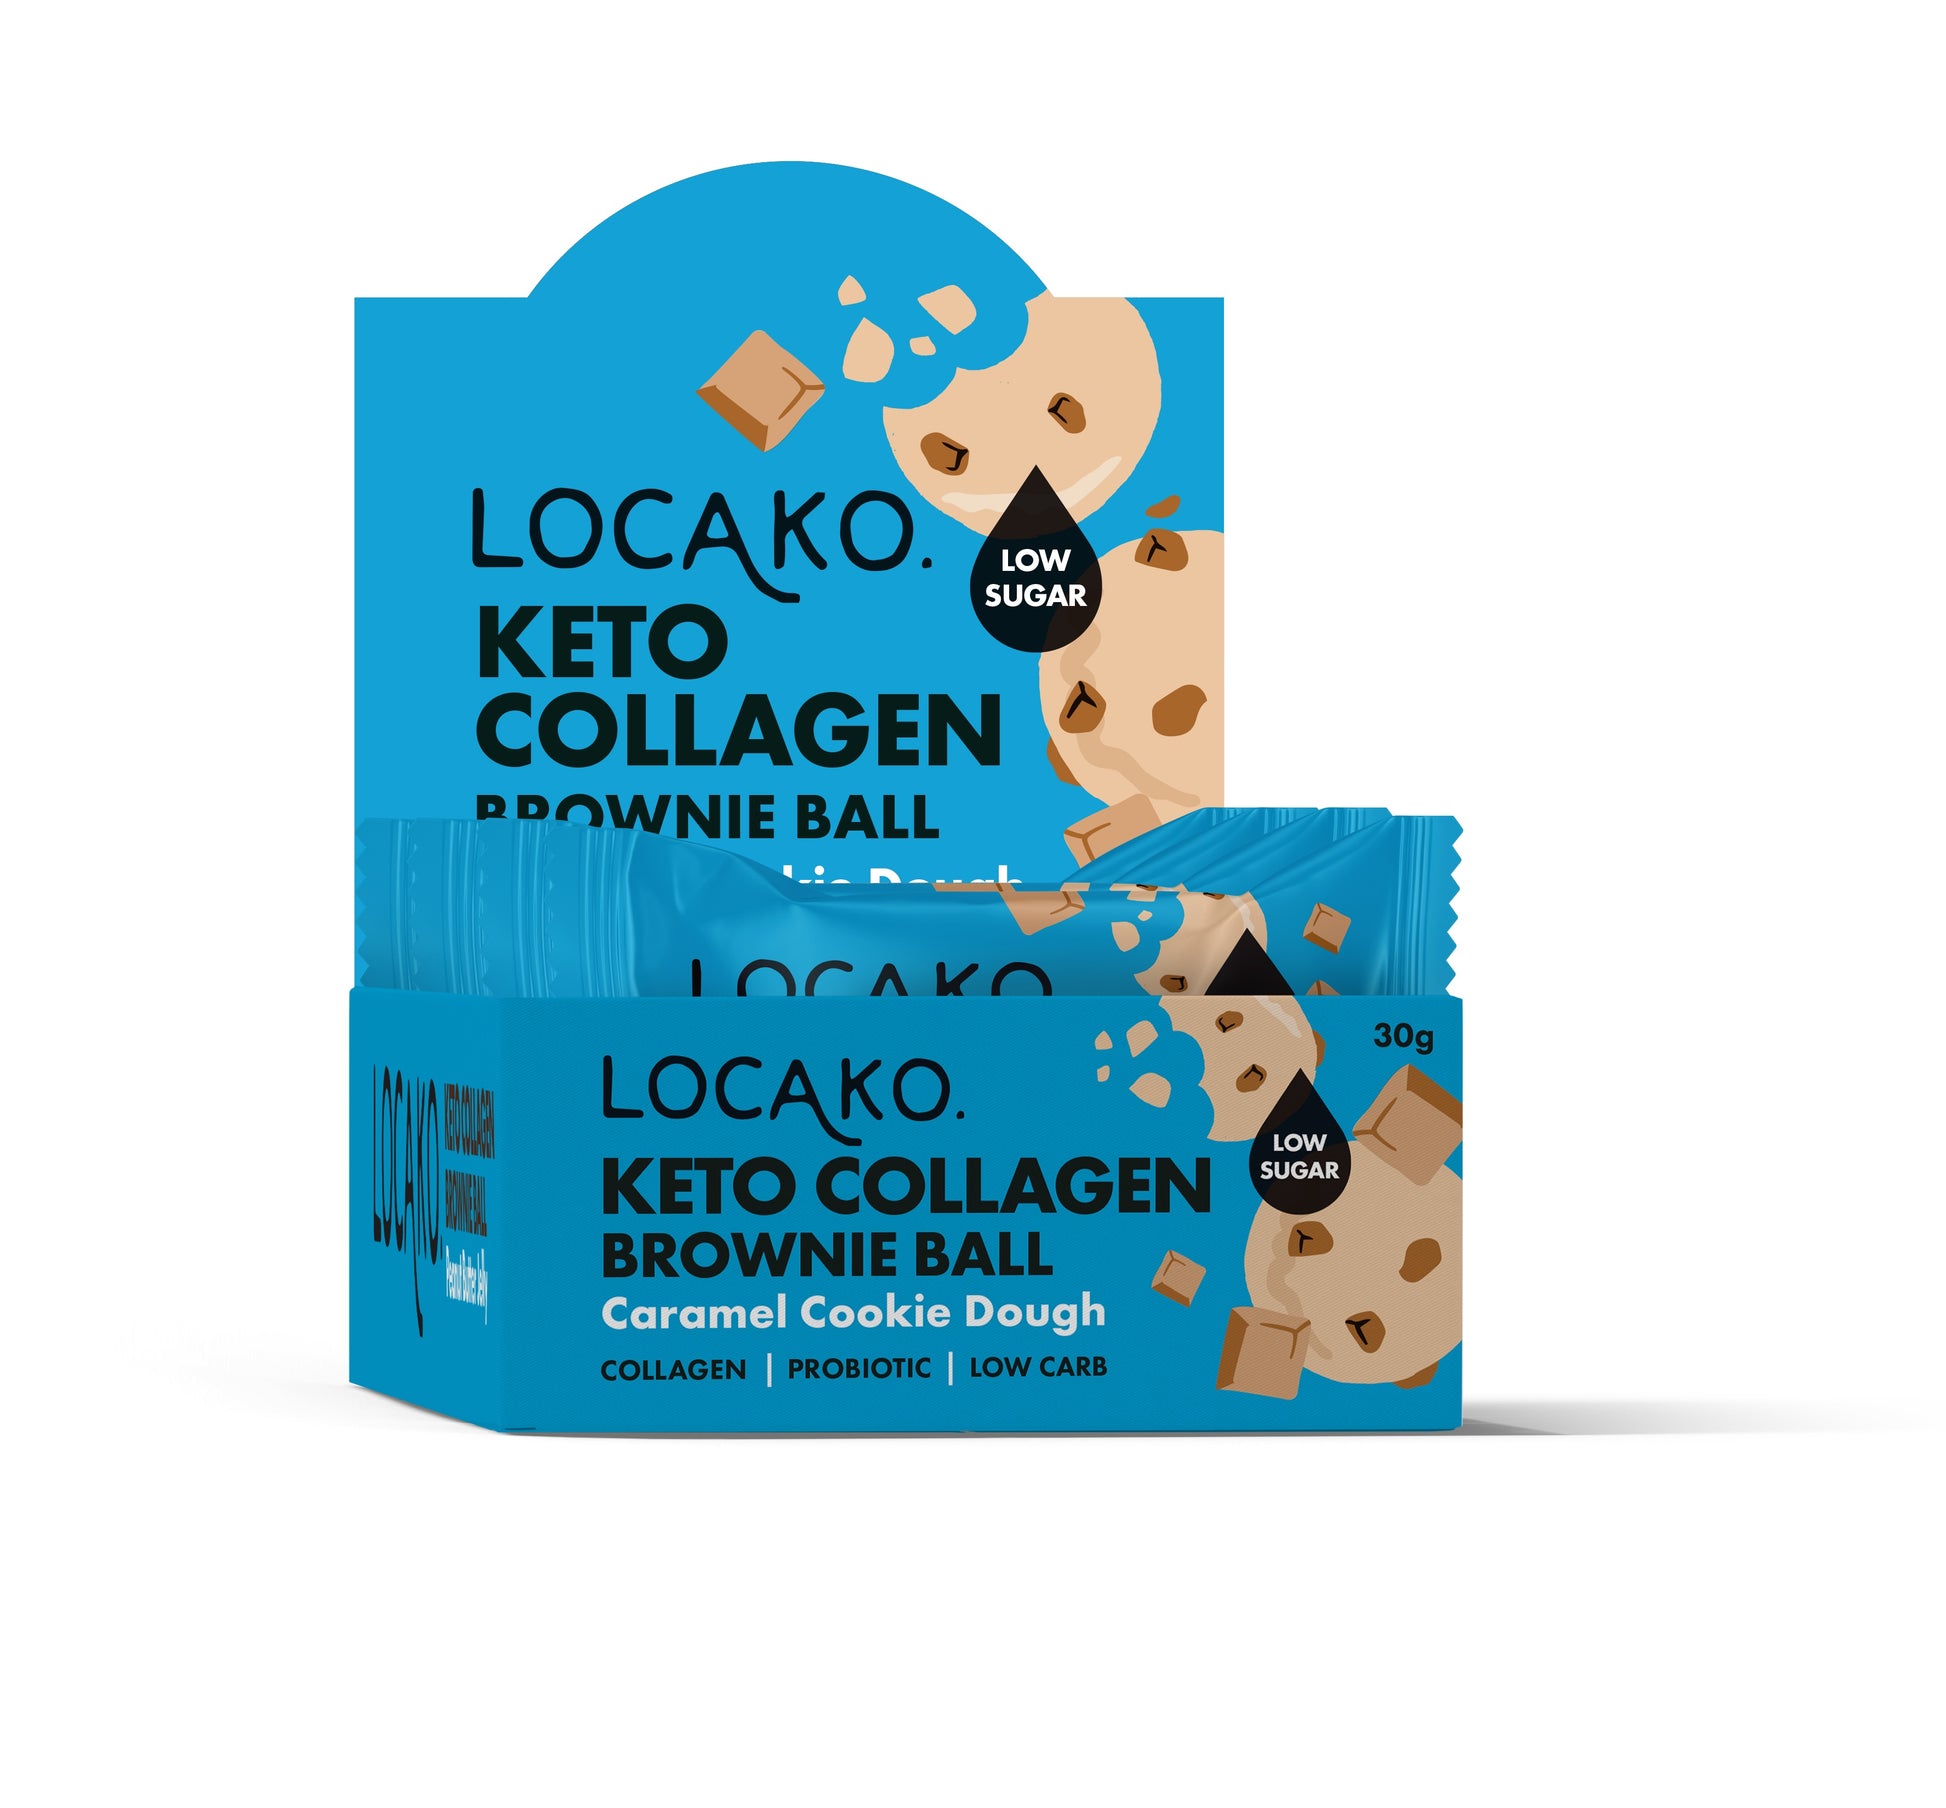 Keto Collagen Brownie Ball Caramel Cookie Dough 30g - Locako